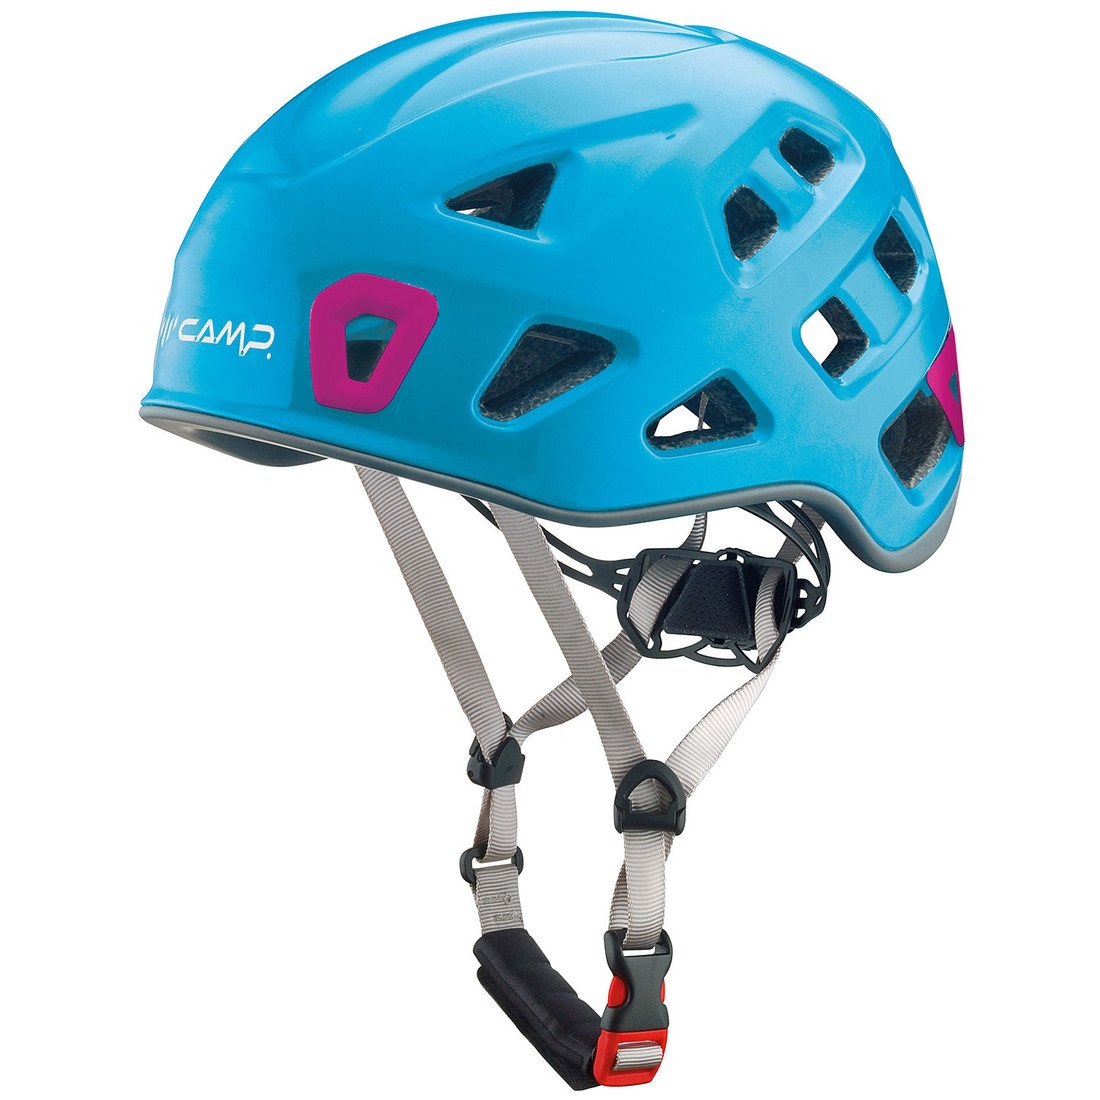 Lezecká helma Camp Storm Velikost helmy: 48-56 cm / Barva: modrá/růžová